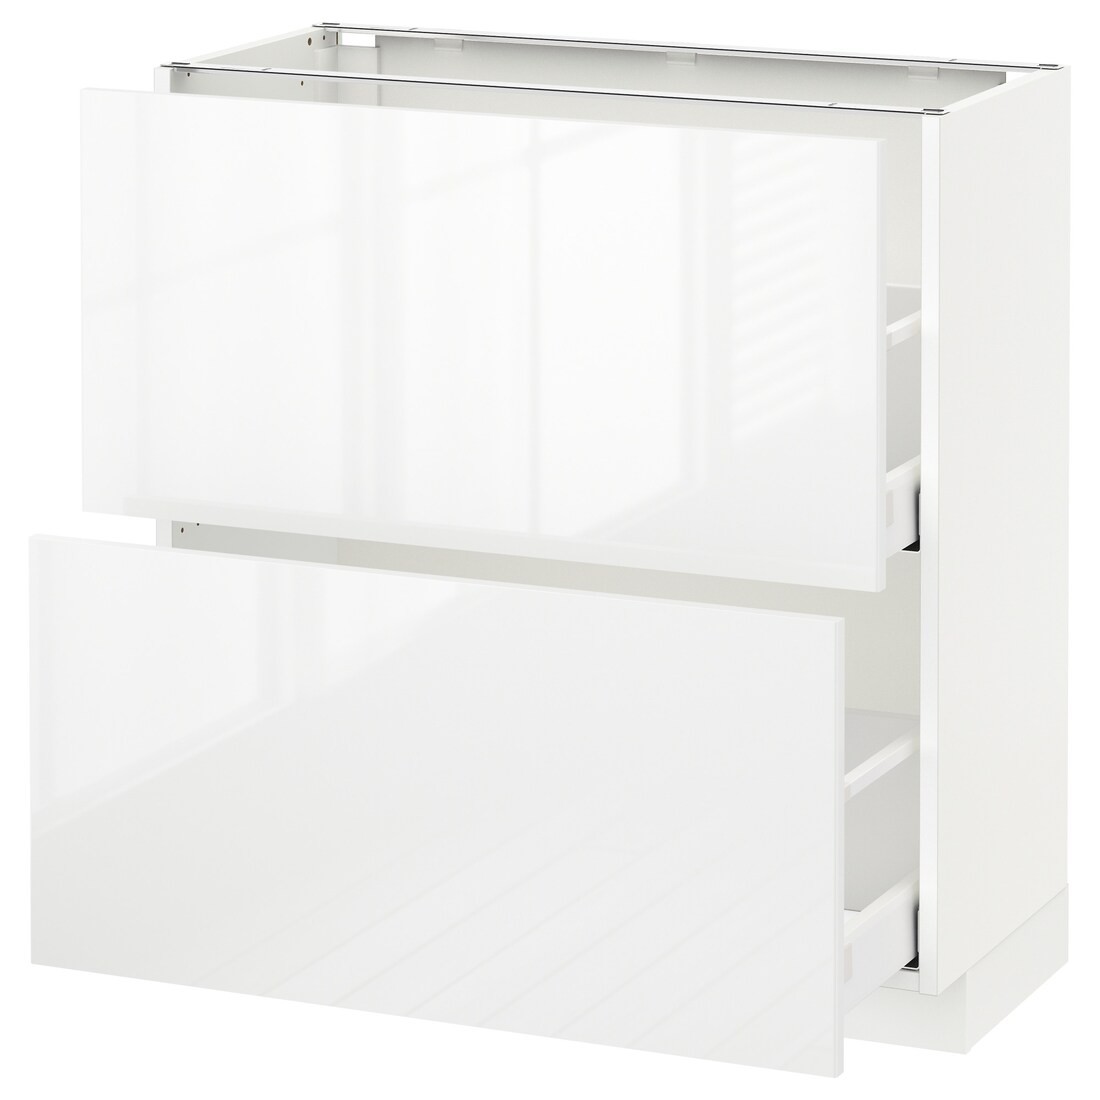 IKEA METOD МЕТОД / MAXIMERA МАКСИМЕРА Шкаф / 2 ящика, белый / Ringhult белый, 80x37 см 19051495 | 190.514.95